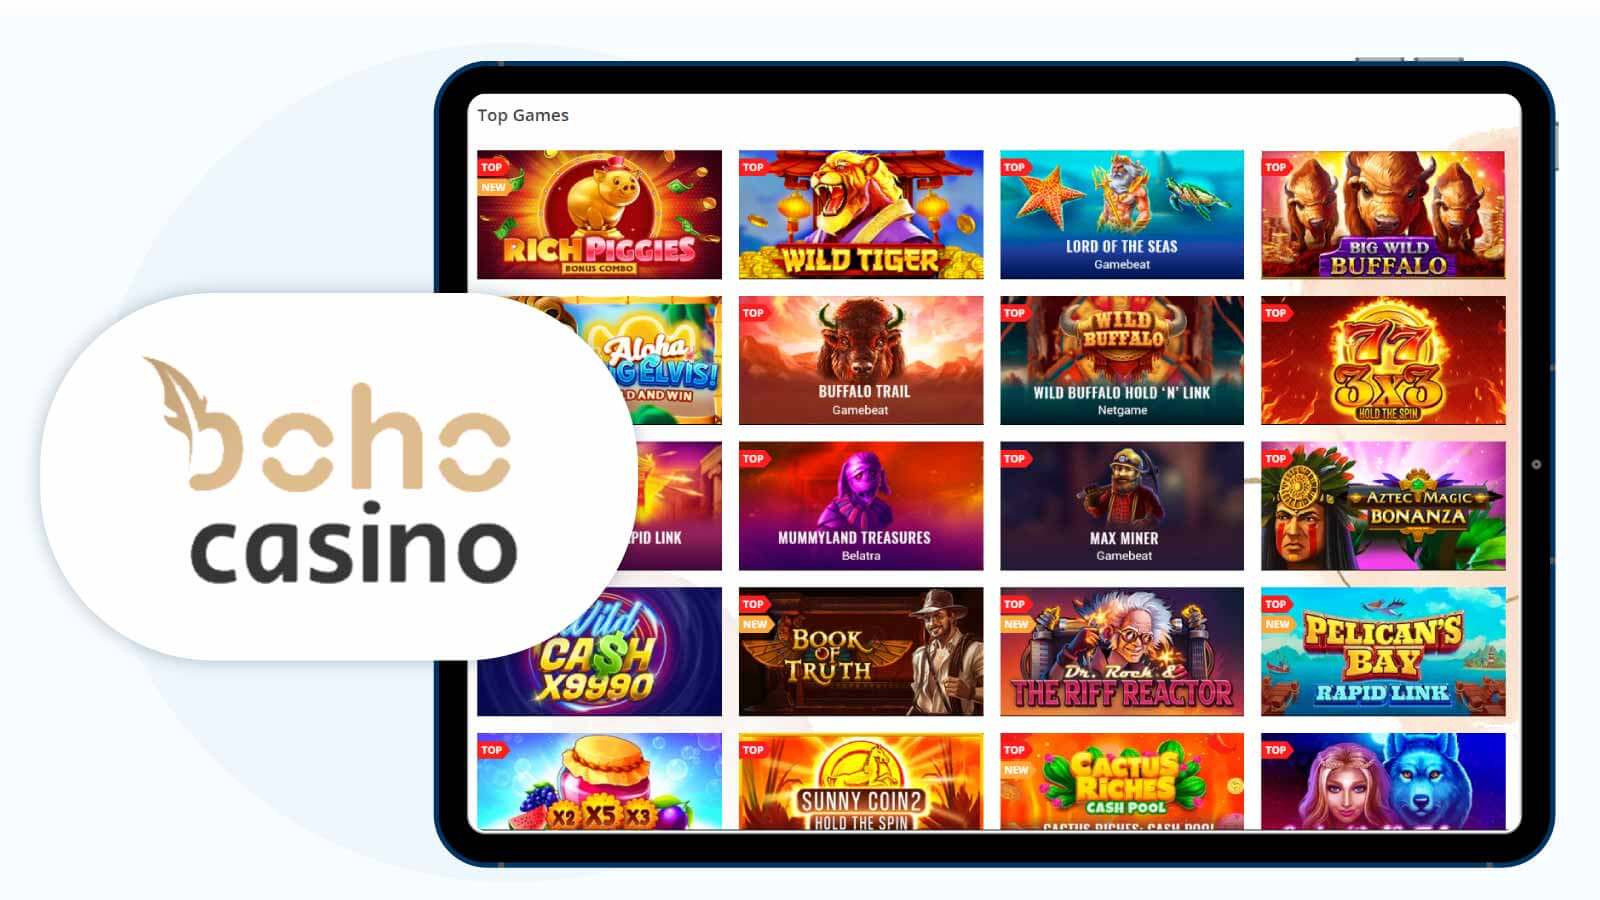 Boho Casino Top No Deposit Bonus with High Maximum Cashout Cap